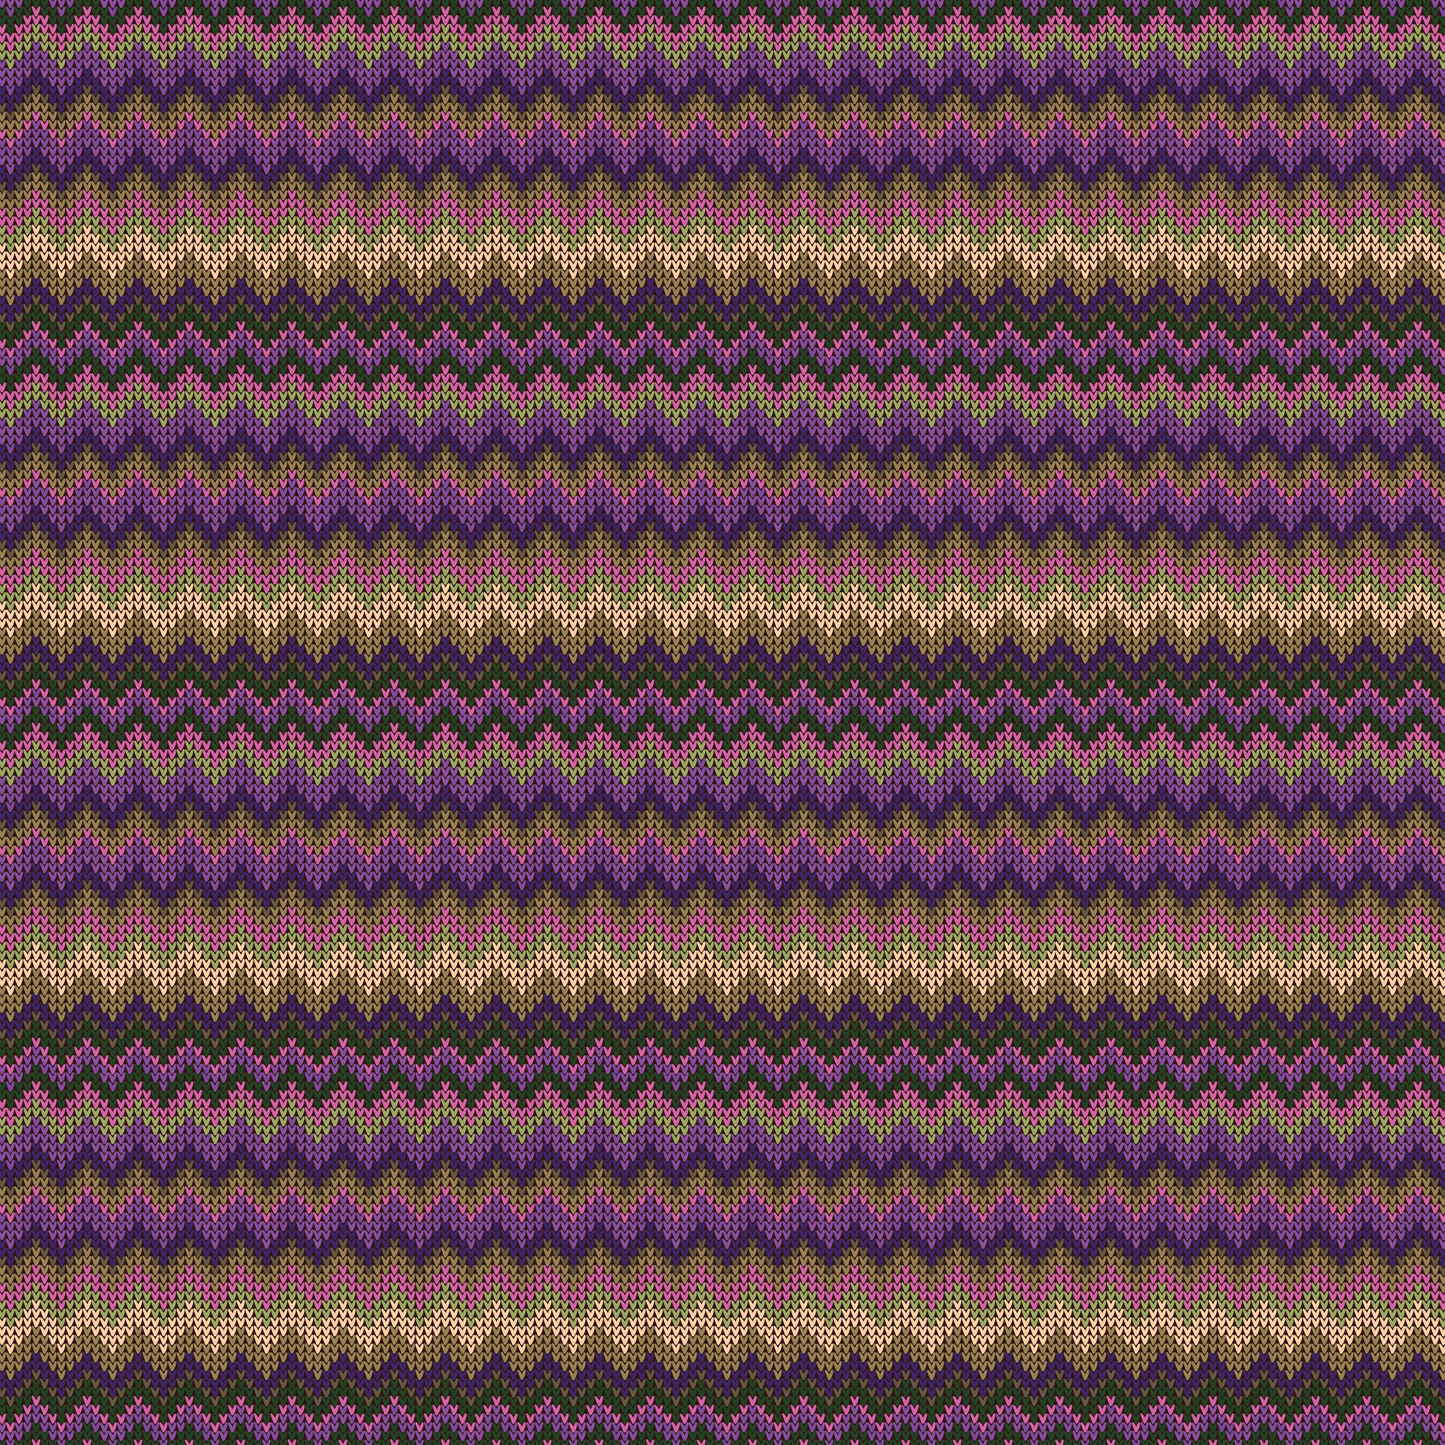 Knitting Yarn - Purple Multi-Colored Stripes 016